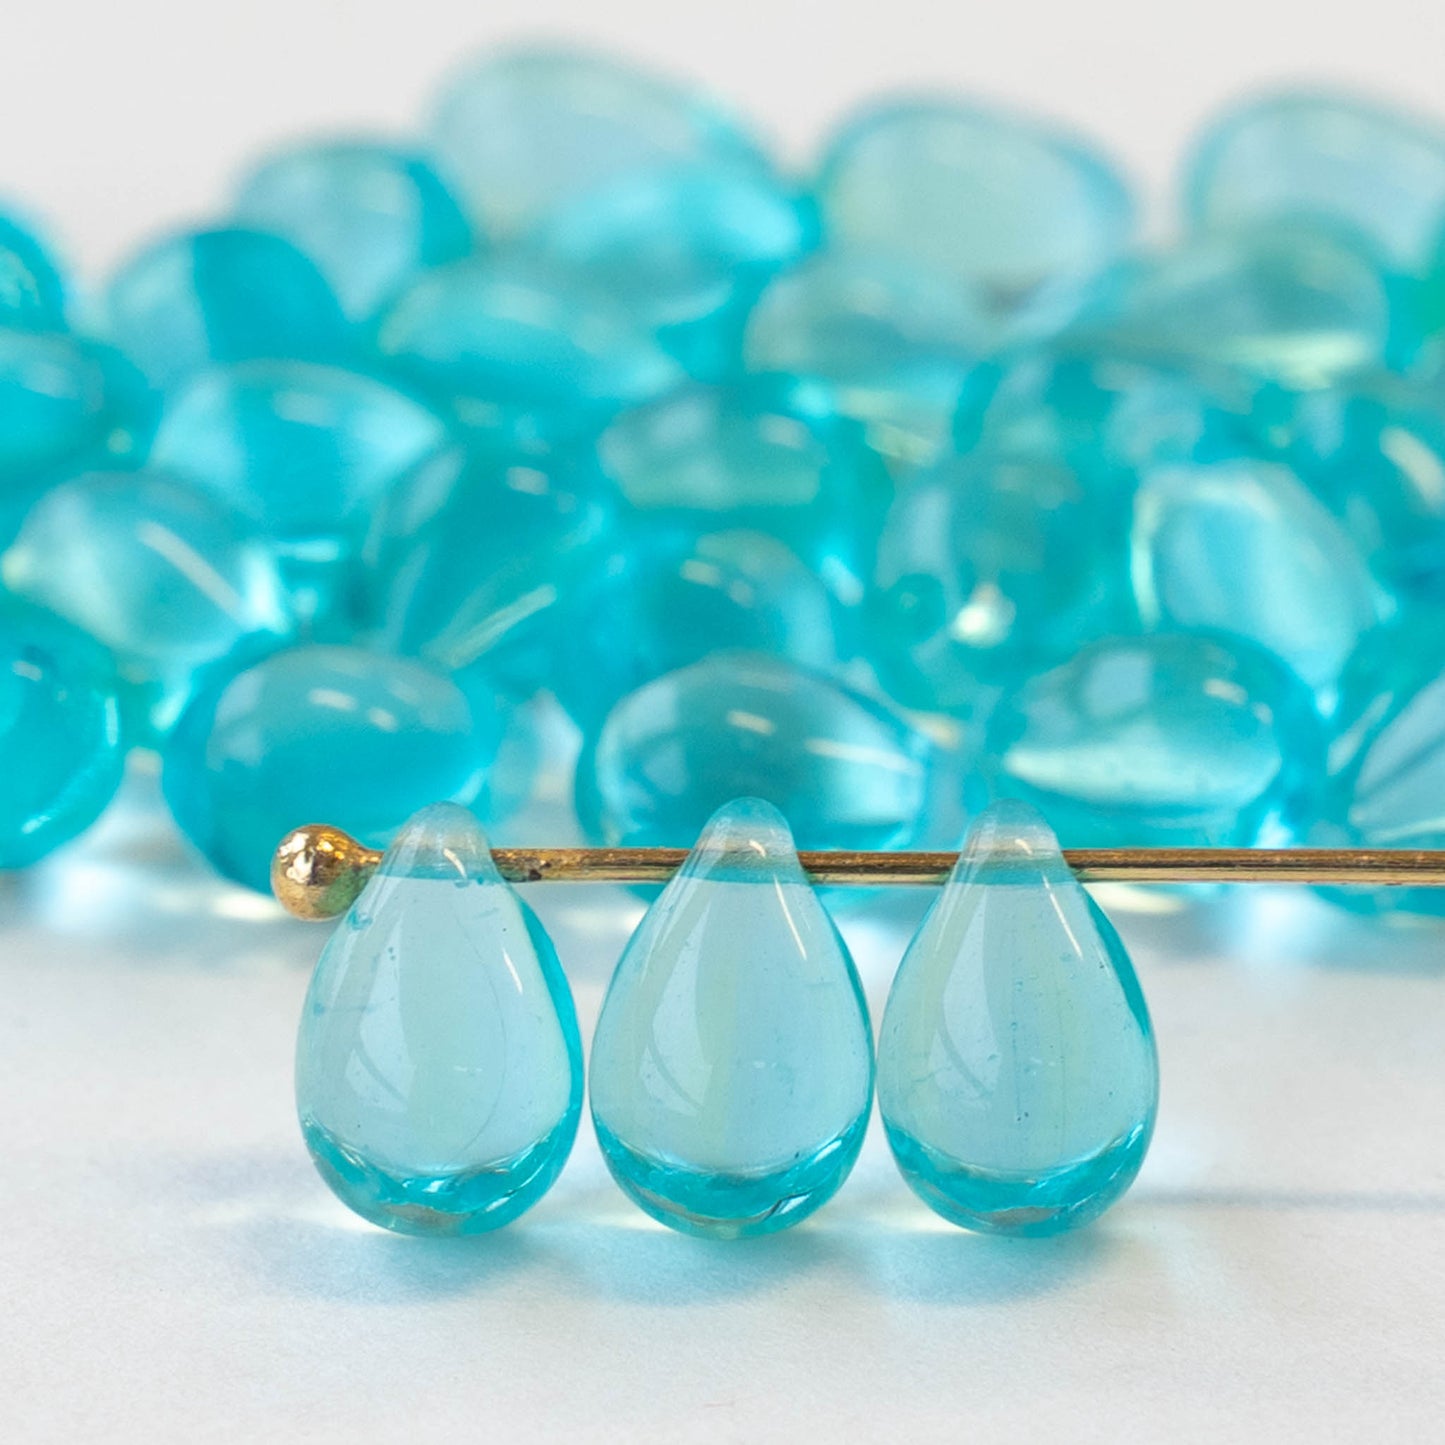 6x9mm Glass Teardrop Beads - Light Aqua - 50 Beads